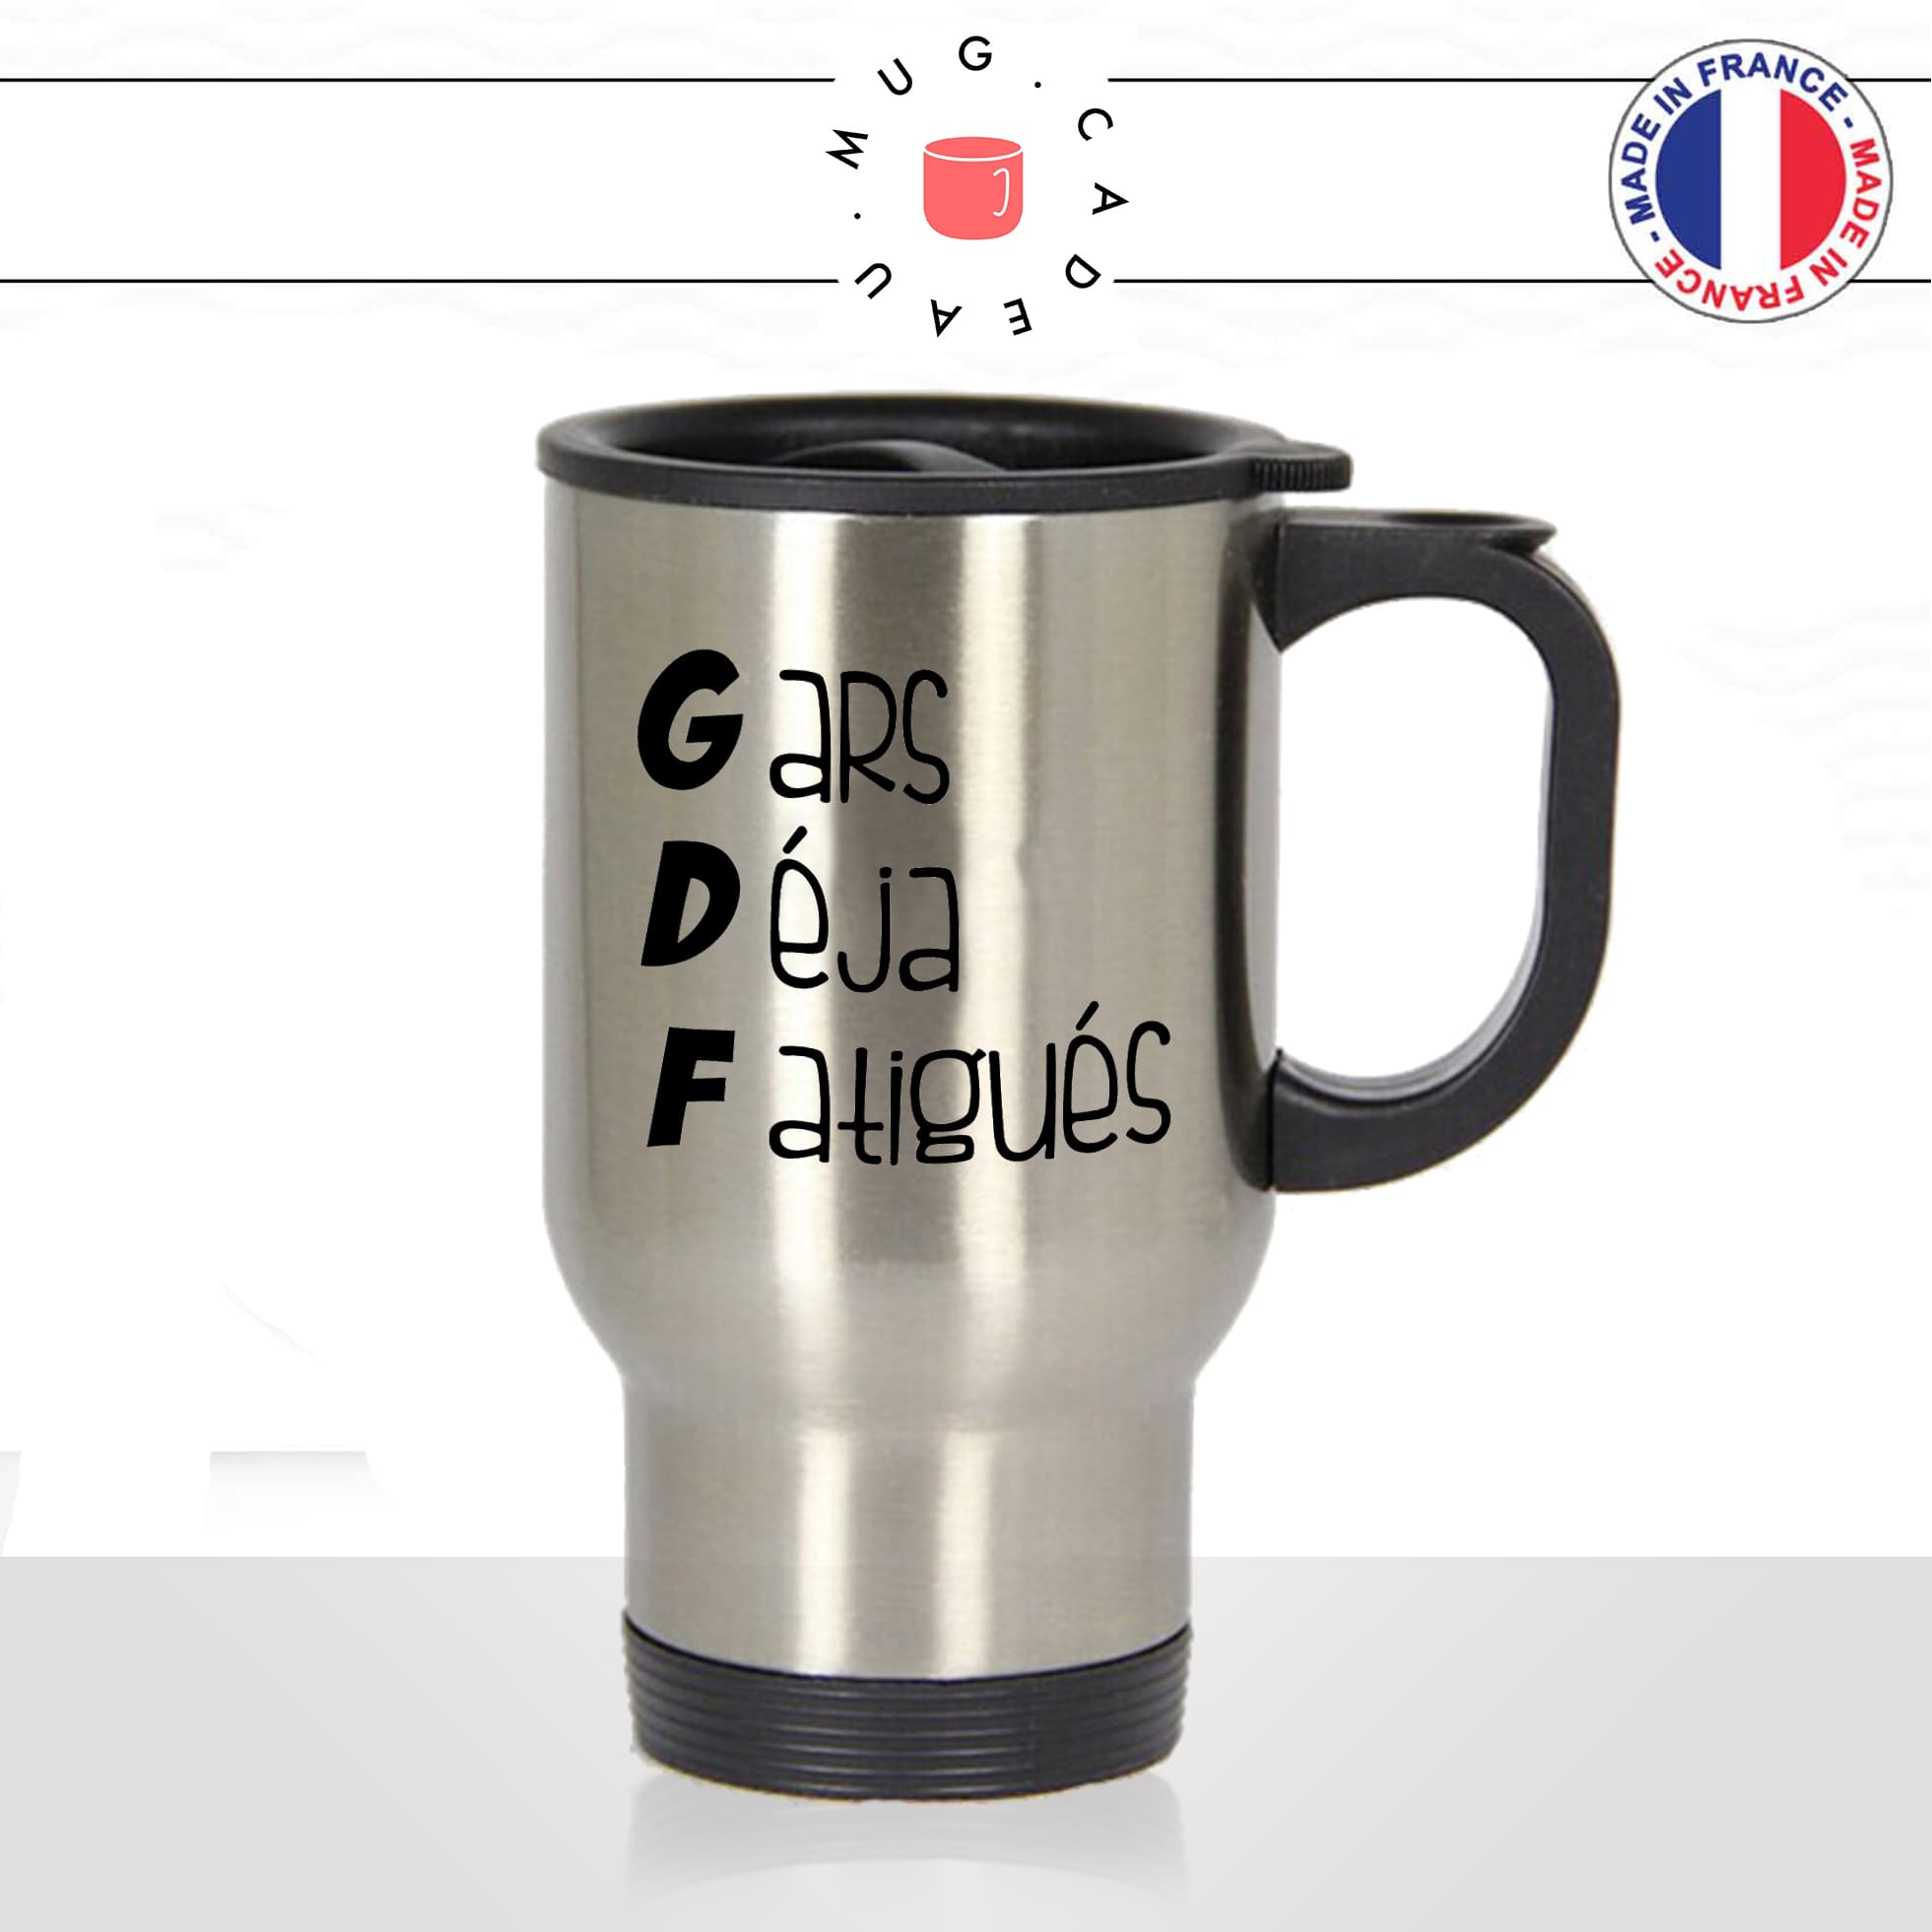 mug-tasse-thermos-isotherme-gdf-gars-deja-fatigués-metier-collegue-accronyme-homme-femme-humour-fun-cool-idée-cadeau-original-personnalisé2